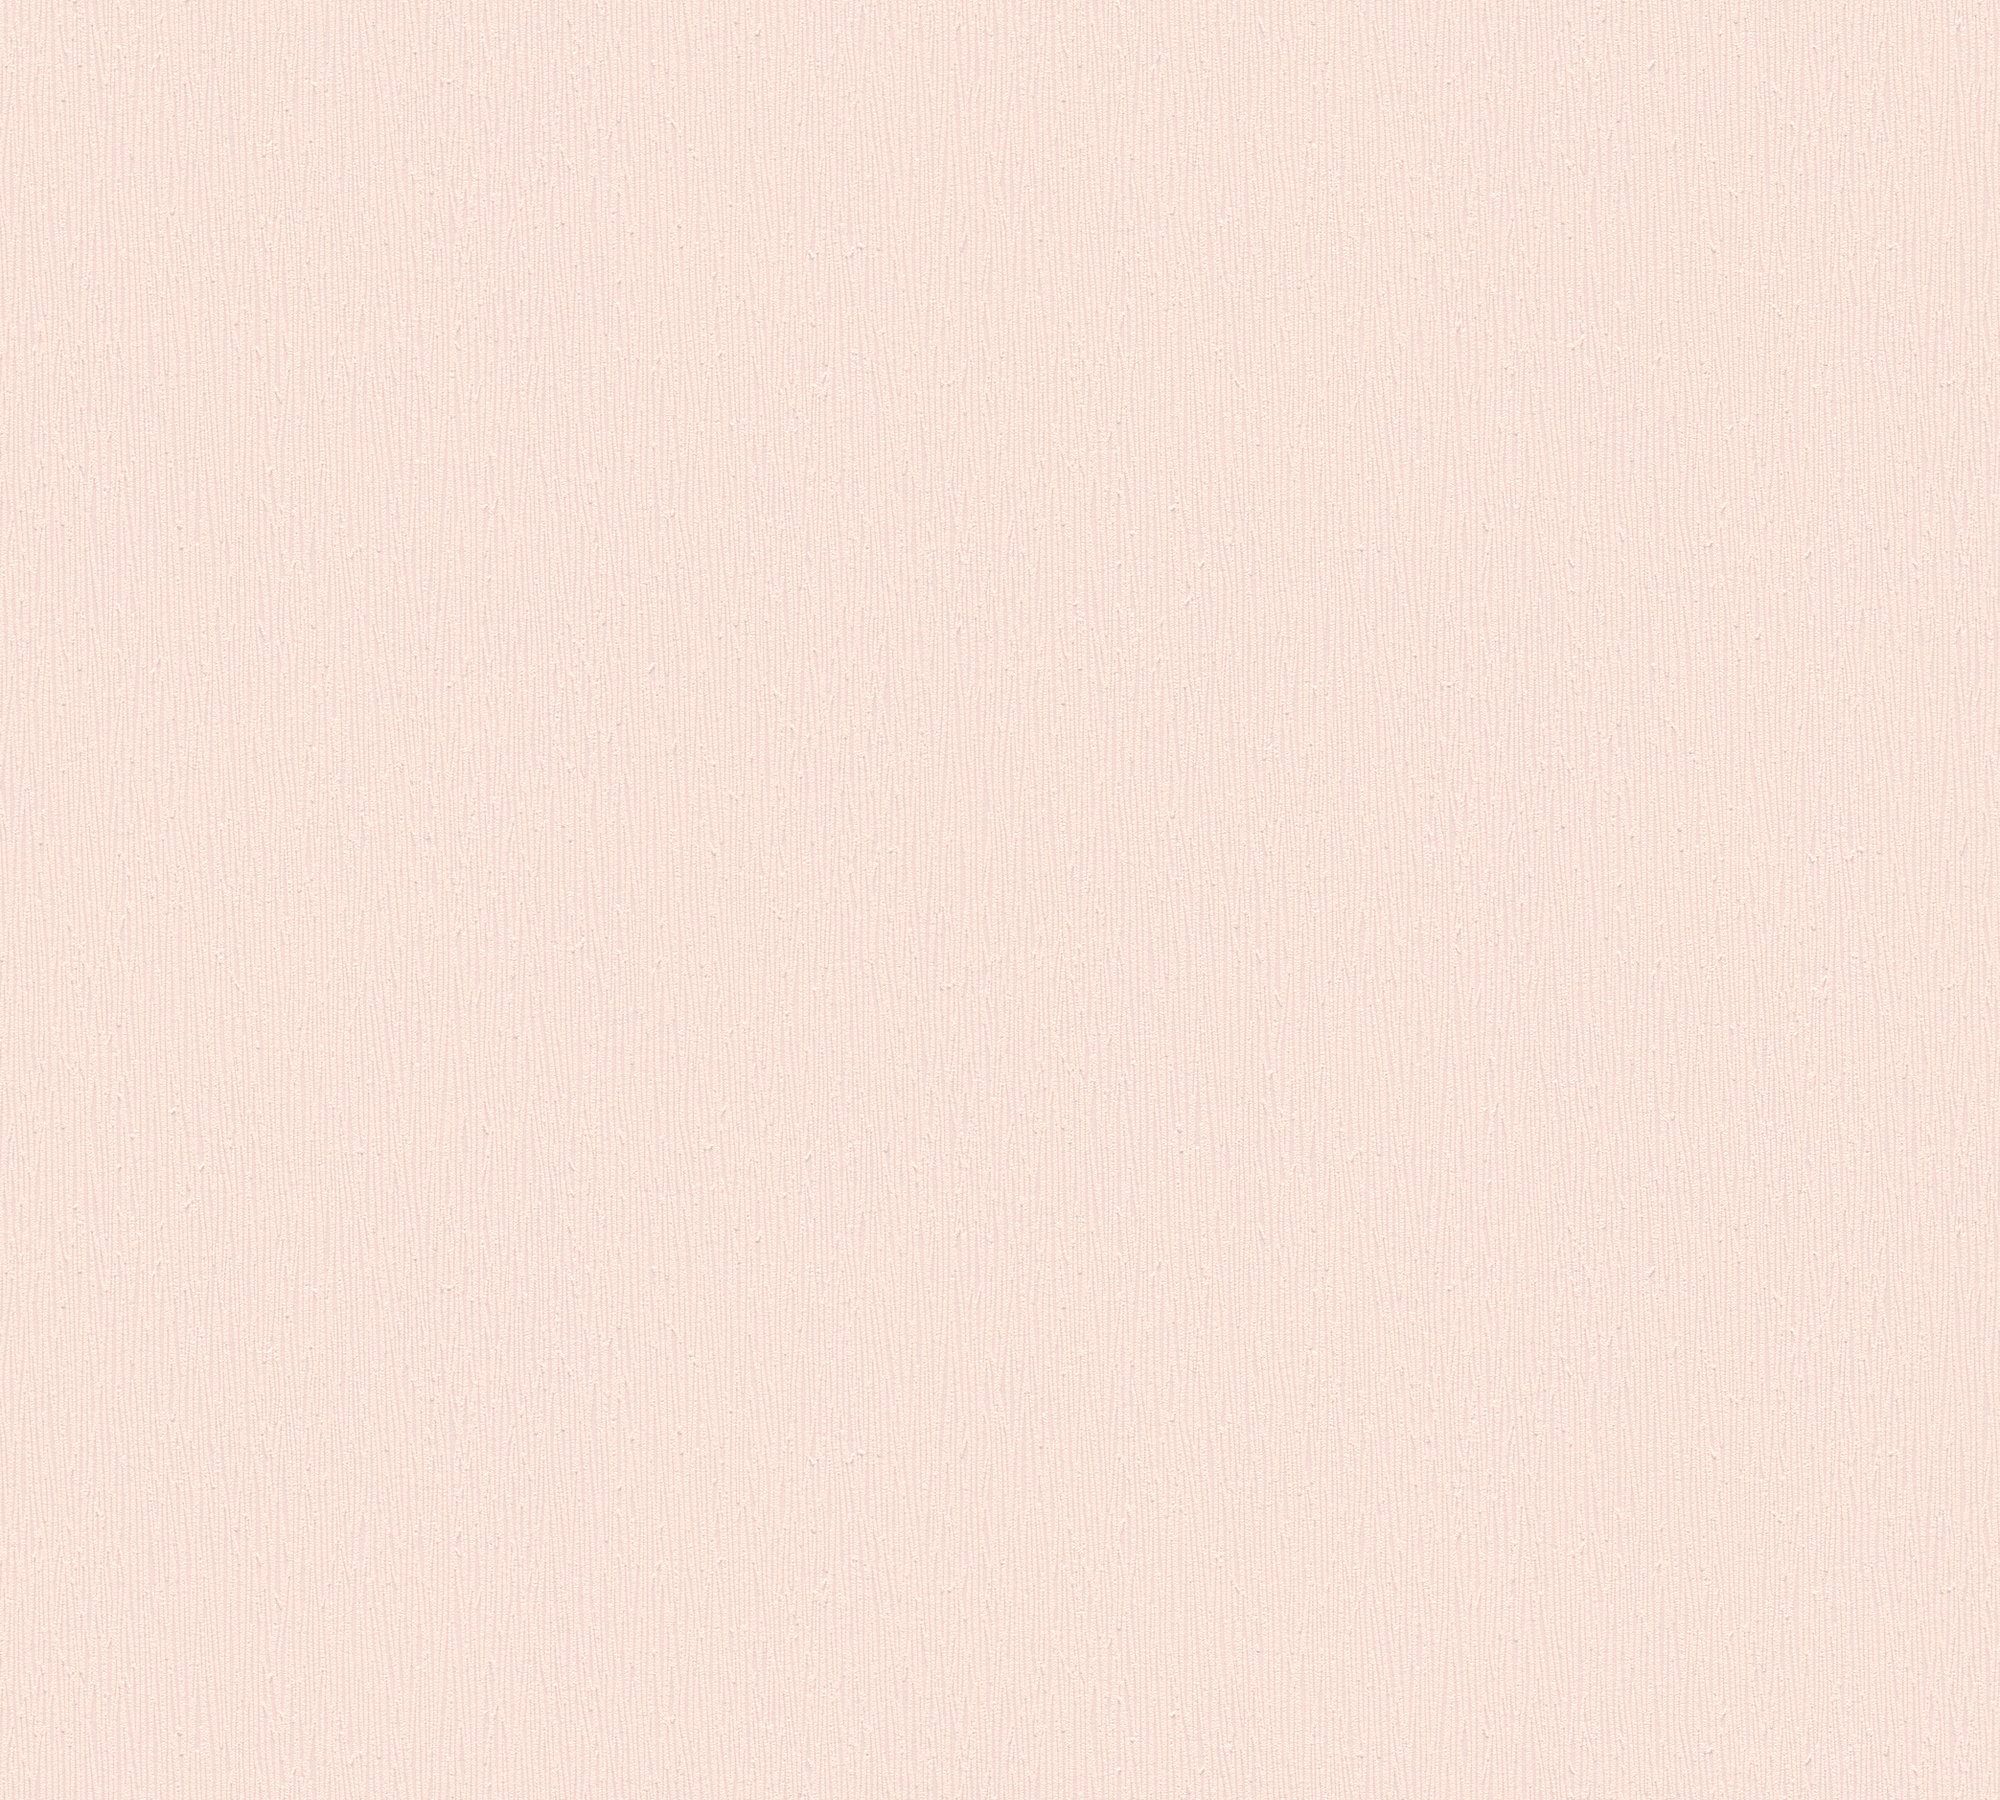 Tapete Trendwall, Uni A.S. Vliestapete einfarbig, creme/rosa unifarben, Création